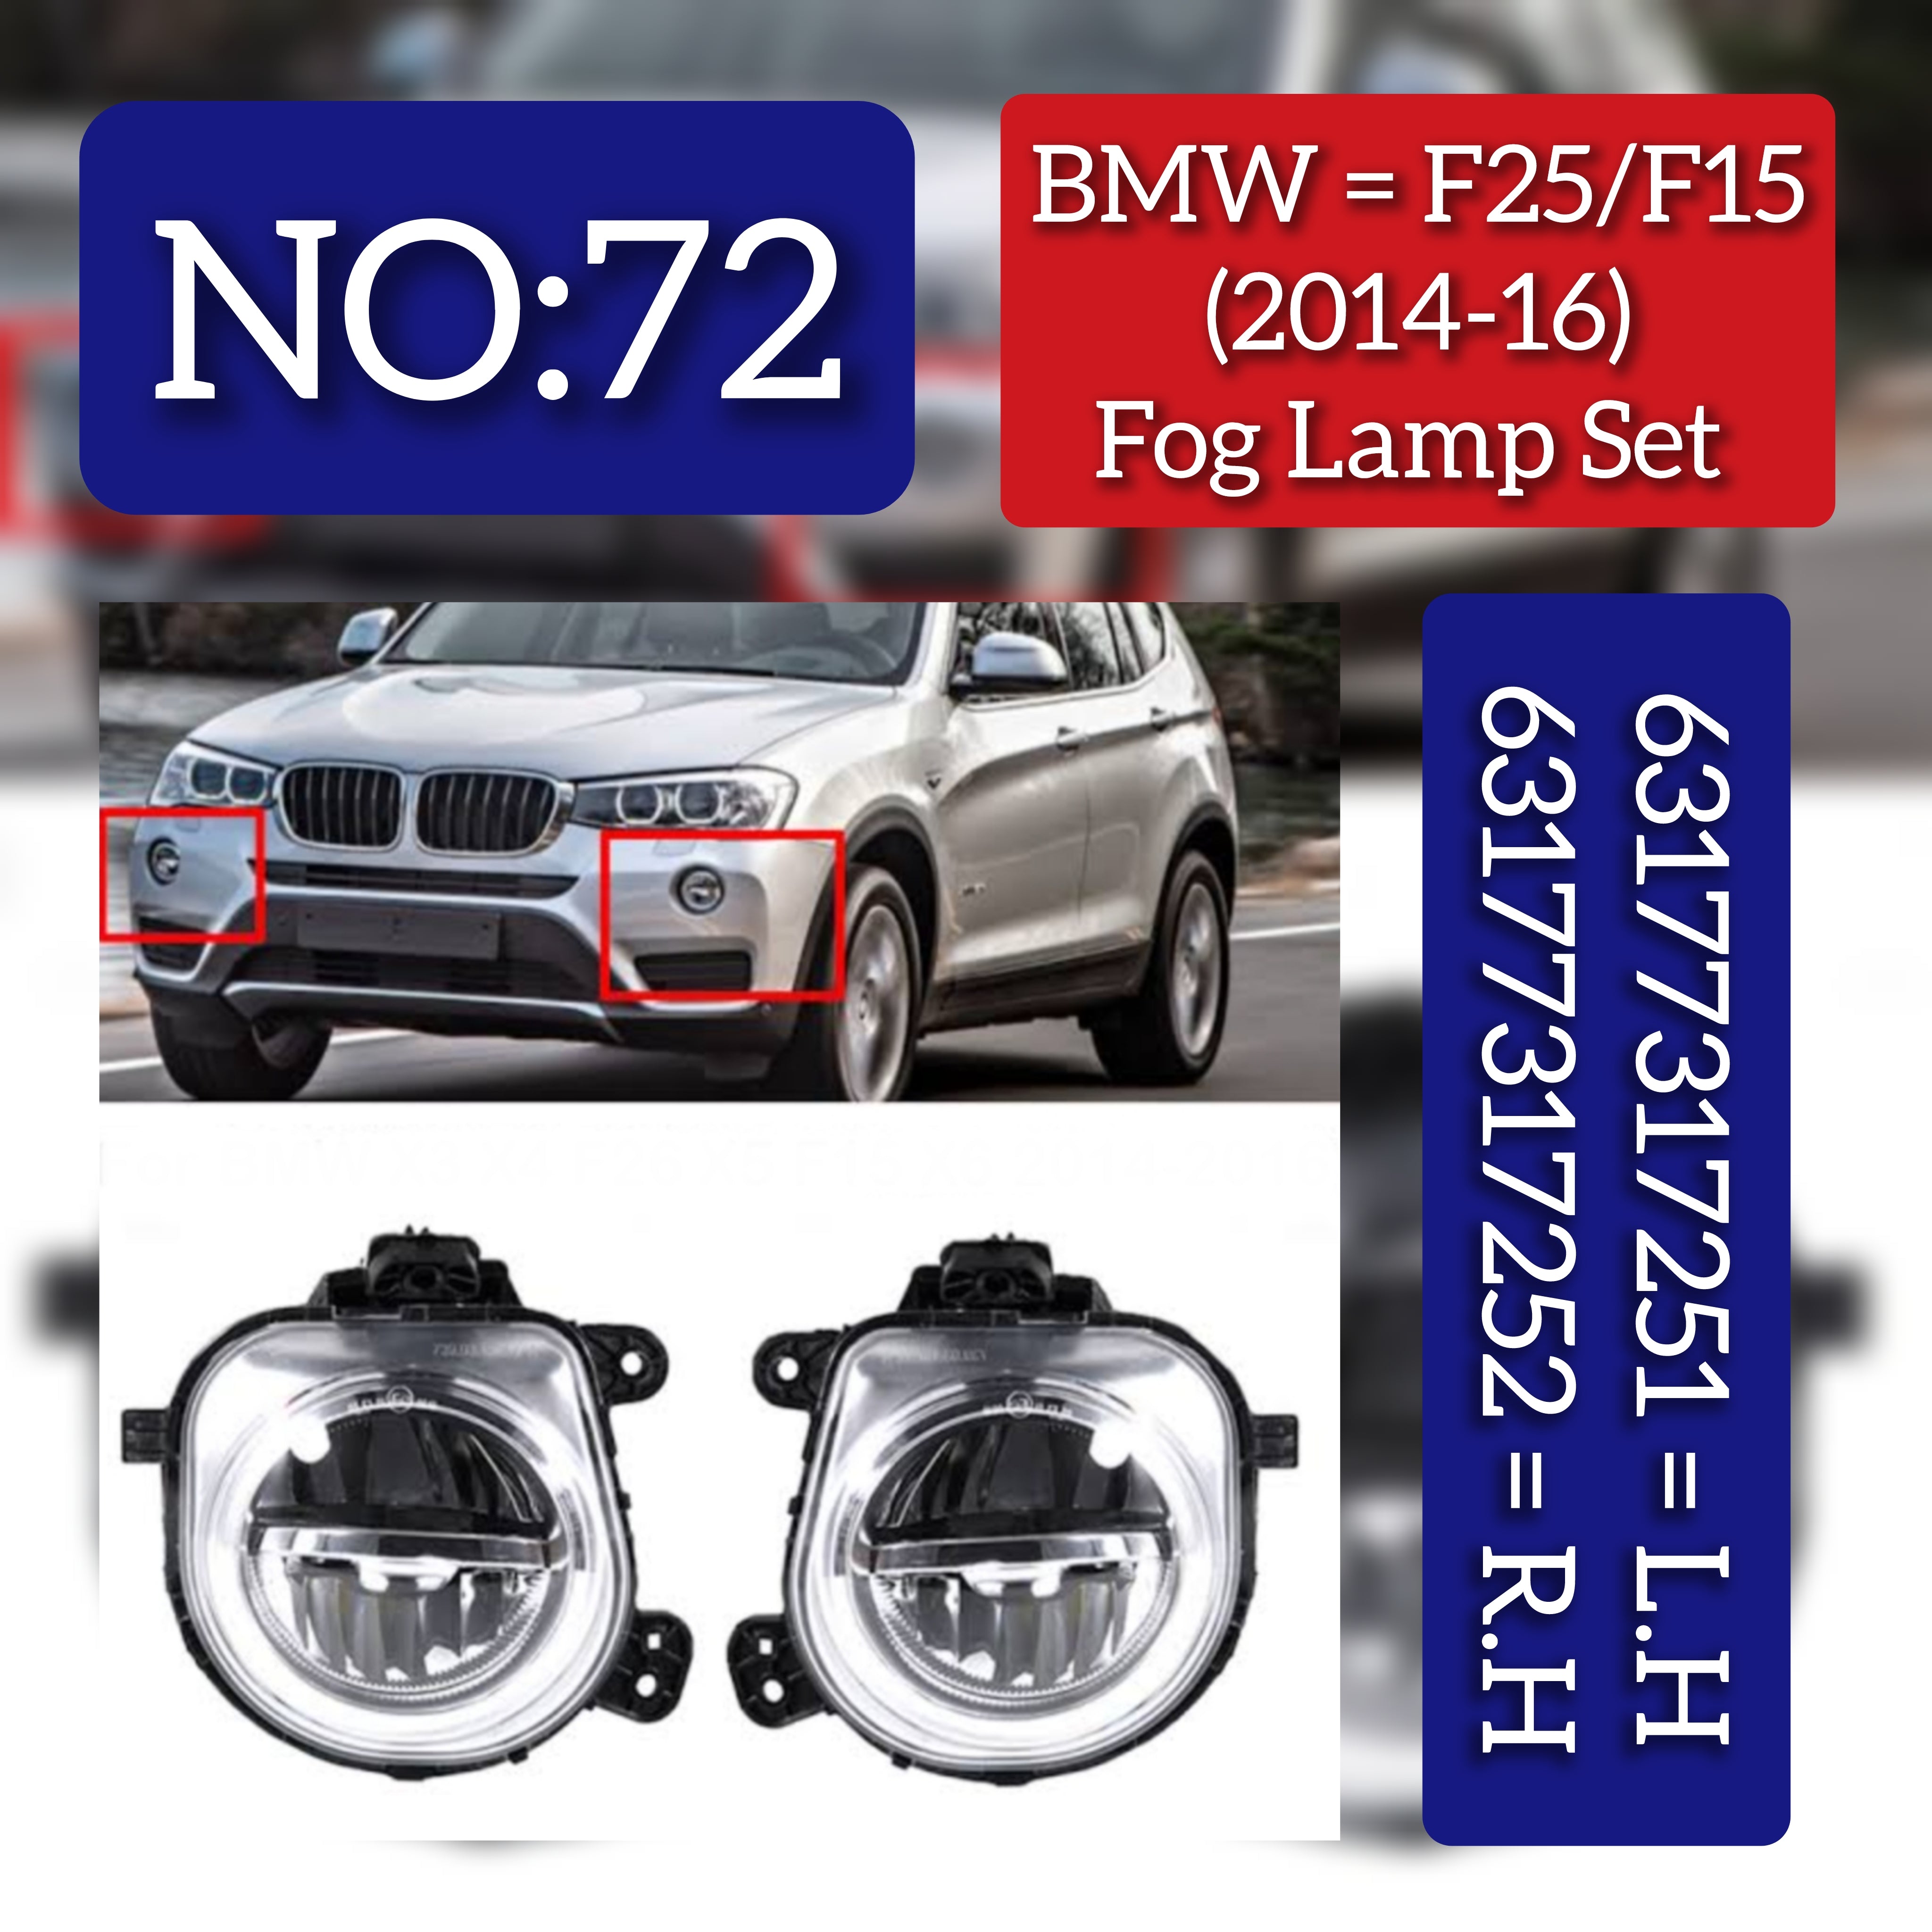 Fog Lamp Fog Light Compatible With BMW X3 F25 X5 F15 2014-2016 Fog Lamp Fog Light Left 63177317251 & Right 63177317252 Tag-FO-72